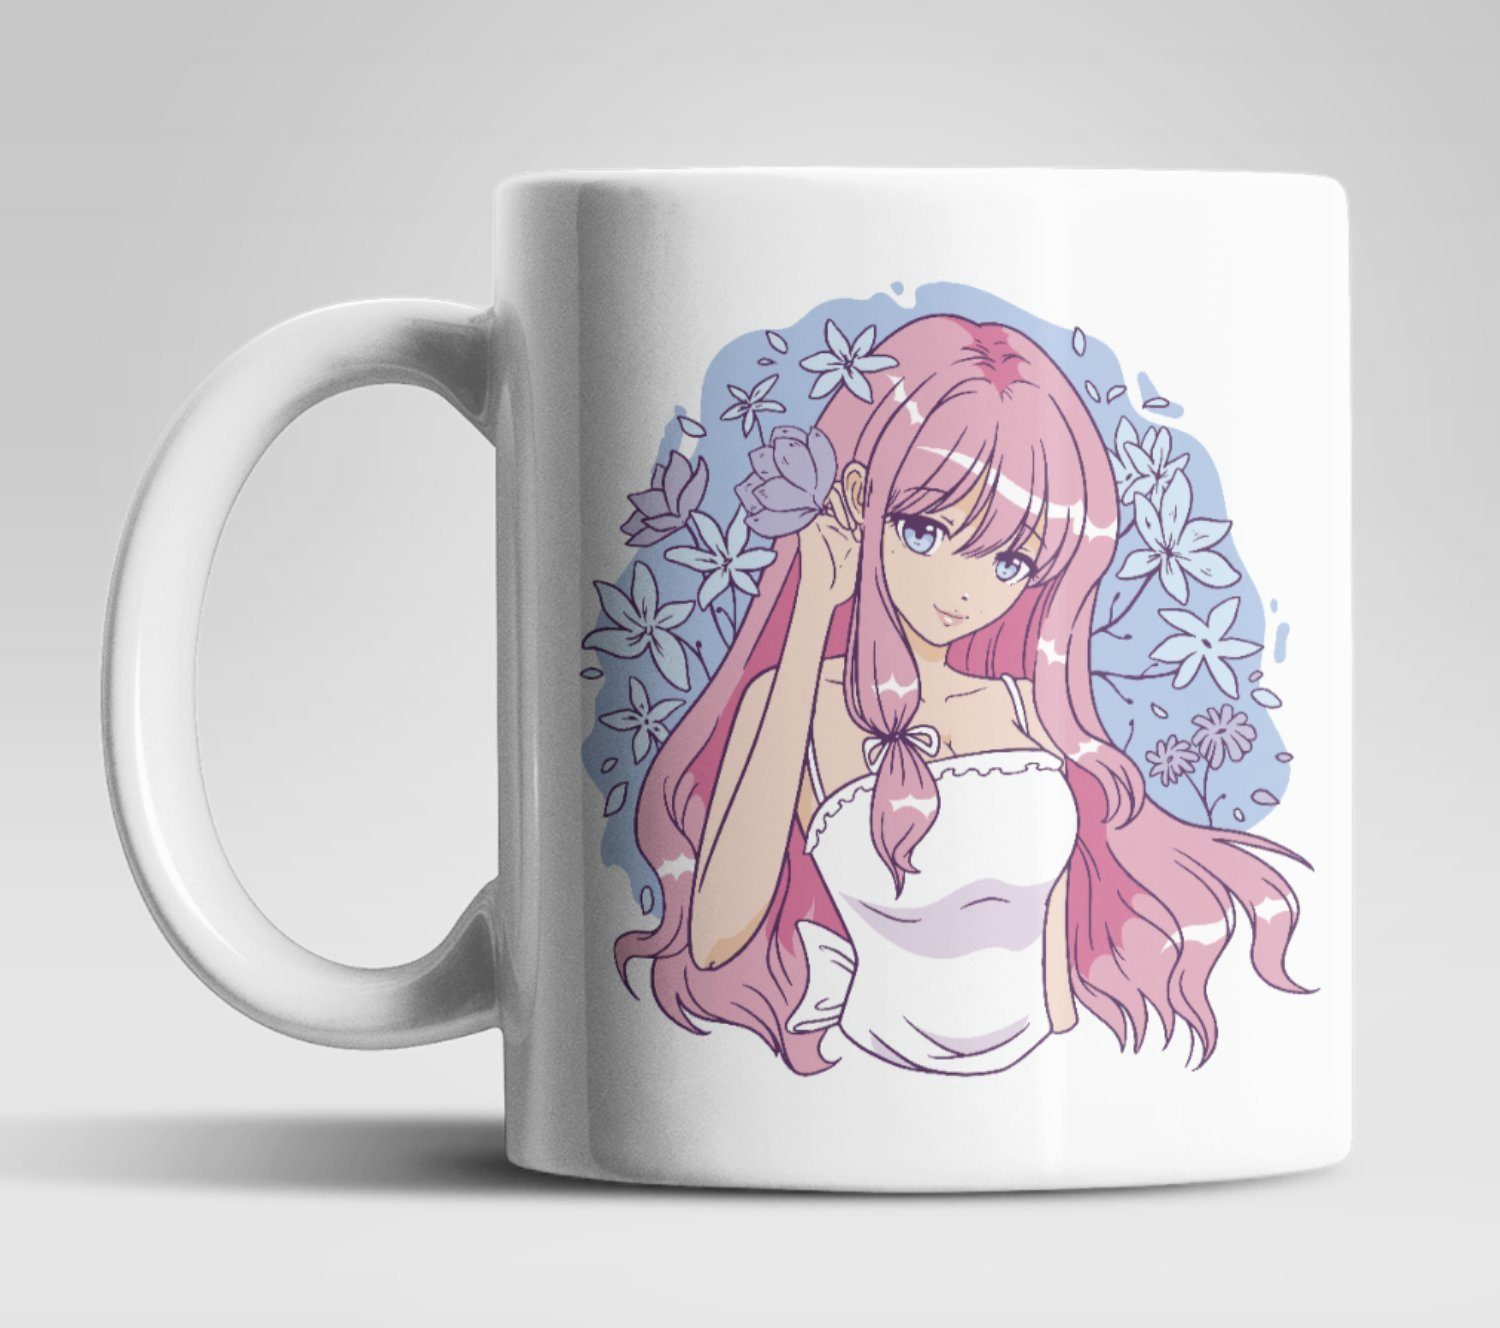 WS-Trend Tasse Anime Sweet Girl Kaffeetasse Teetasse mit Motiv, Keramik, 330 ml